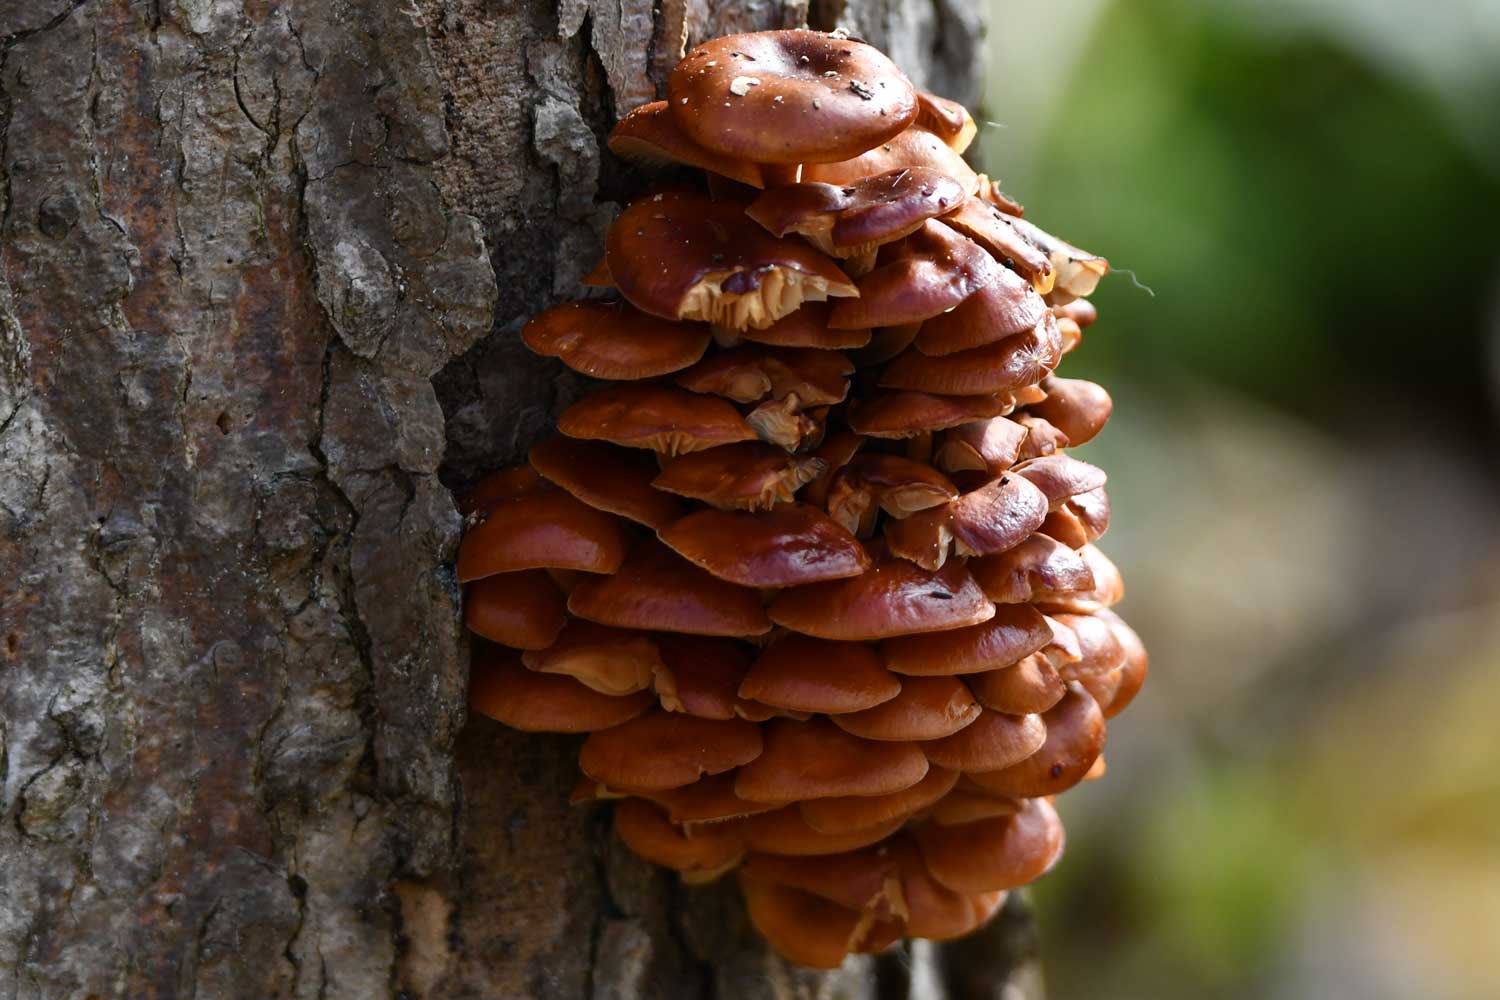 Velvet foot mushrooms on a tree.